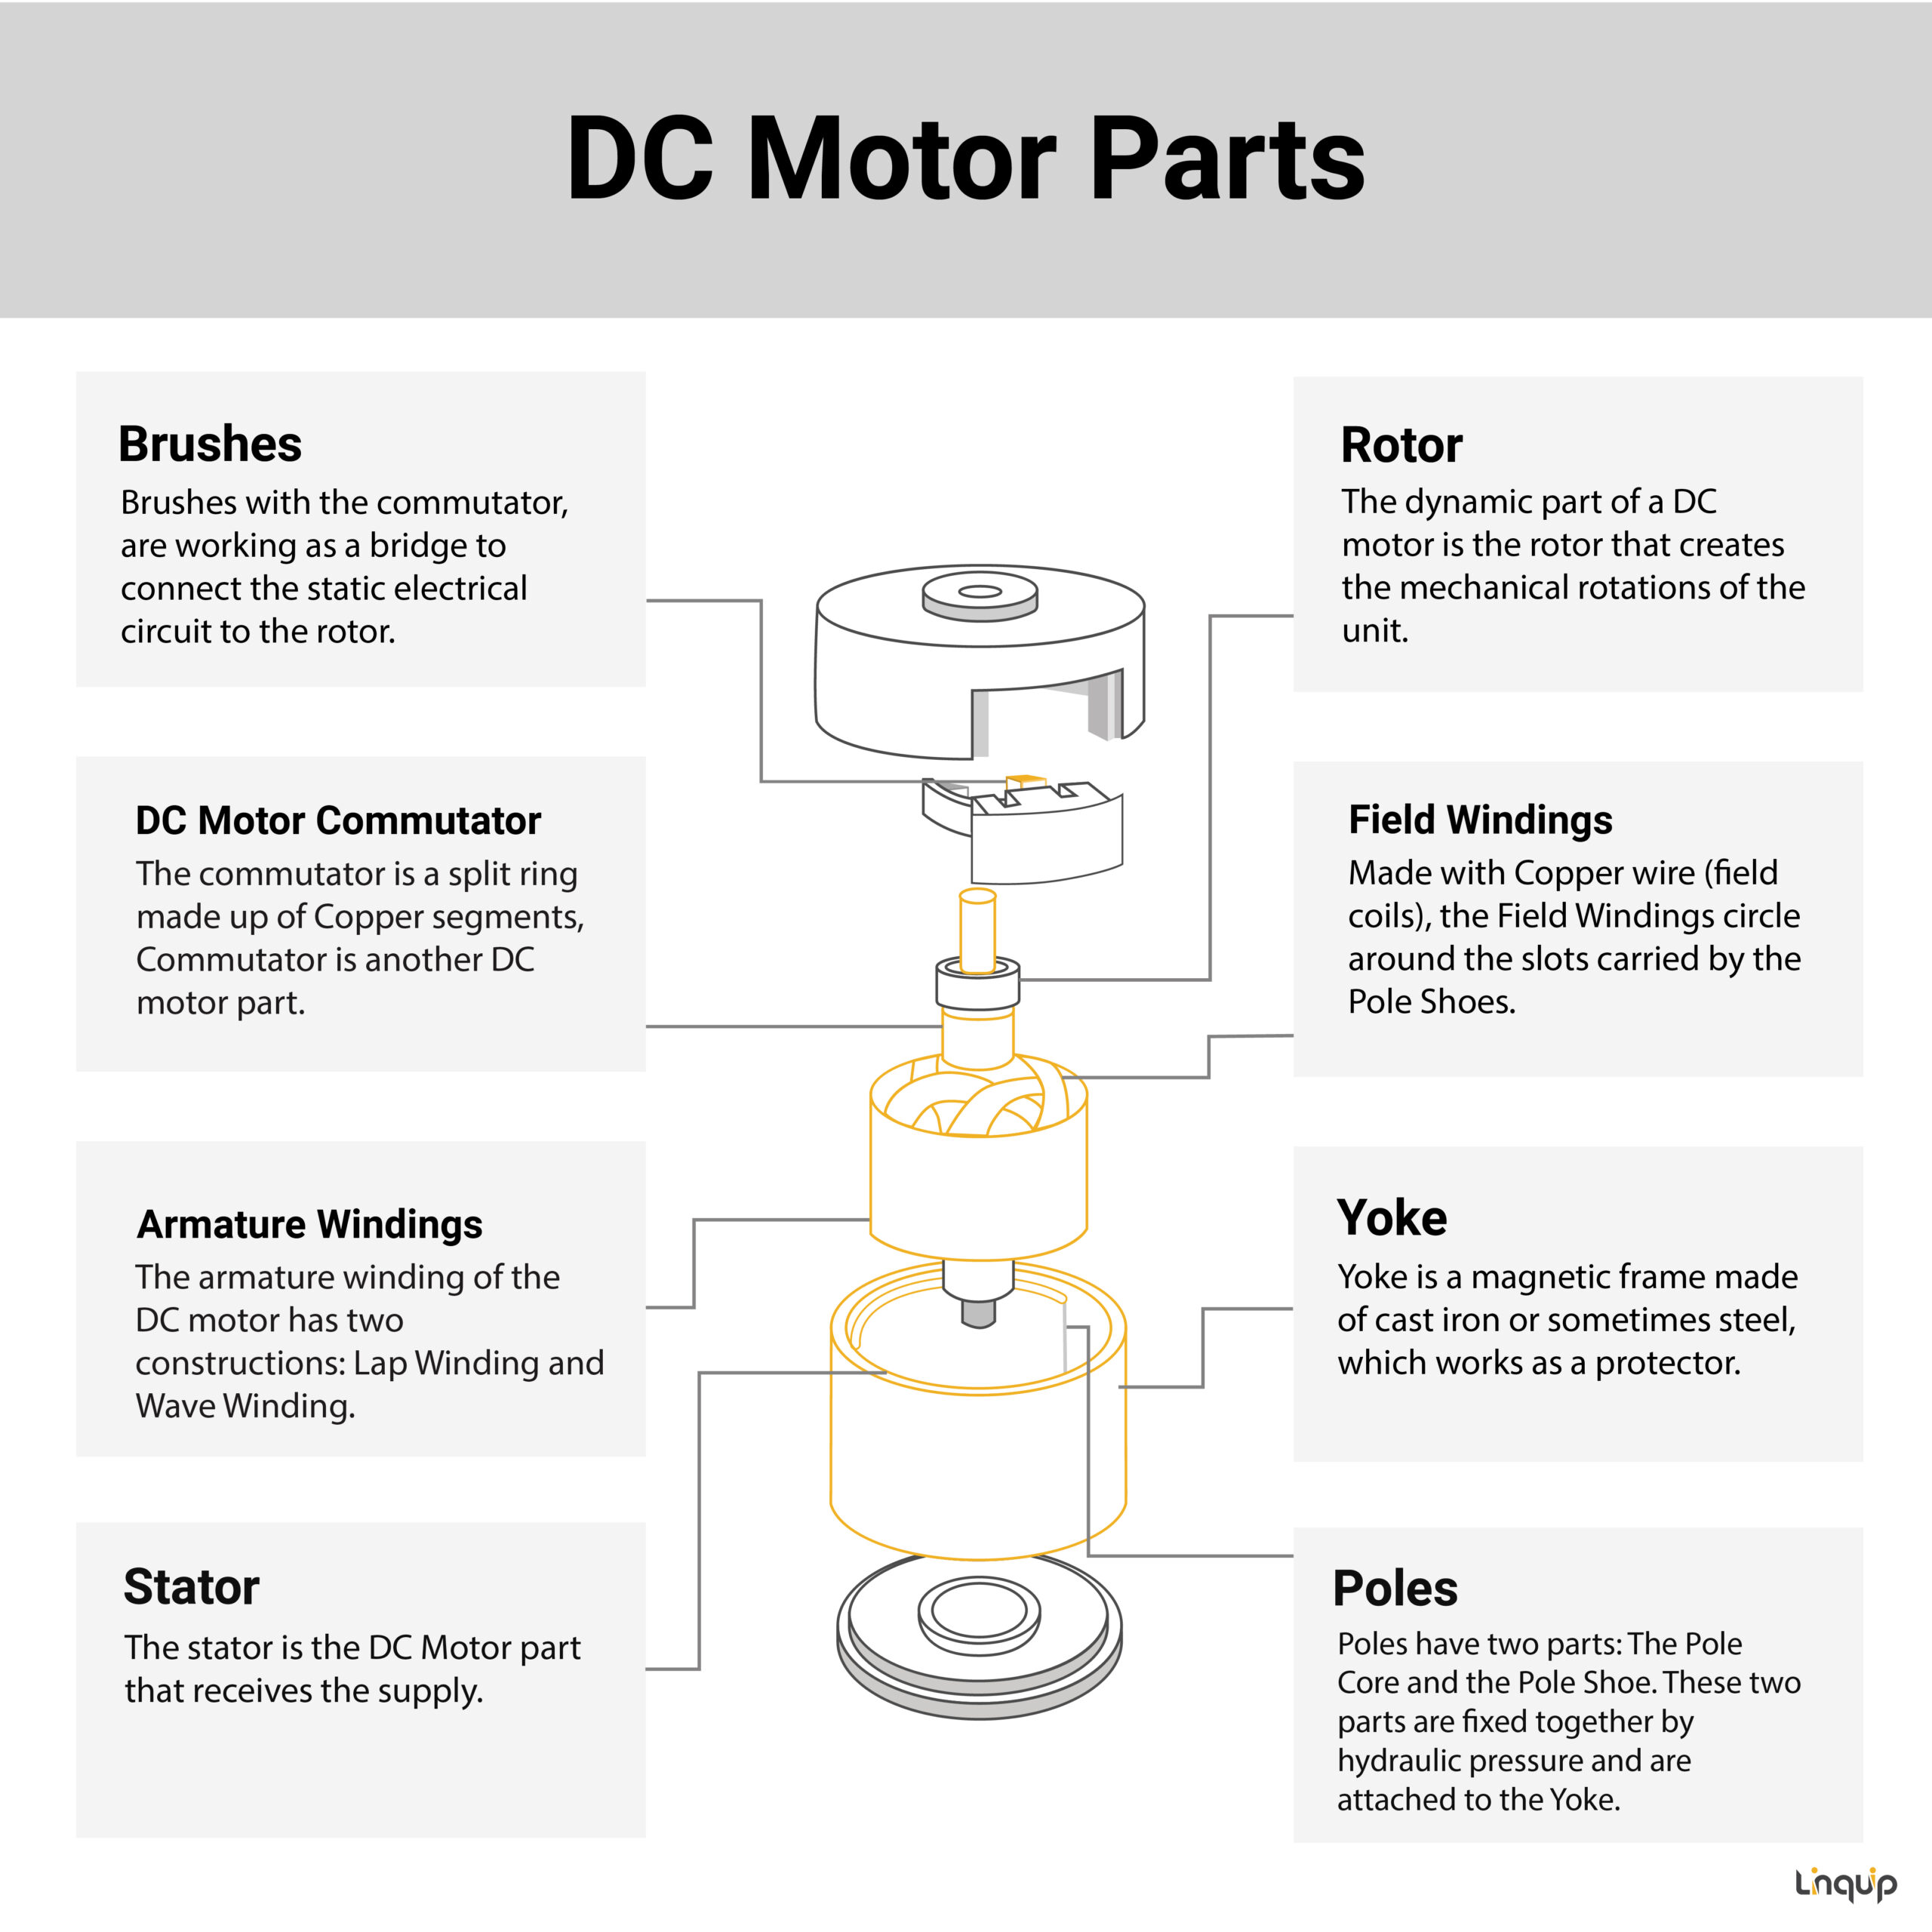 DC Motor Part